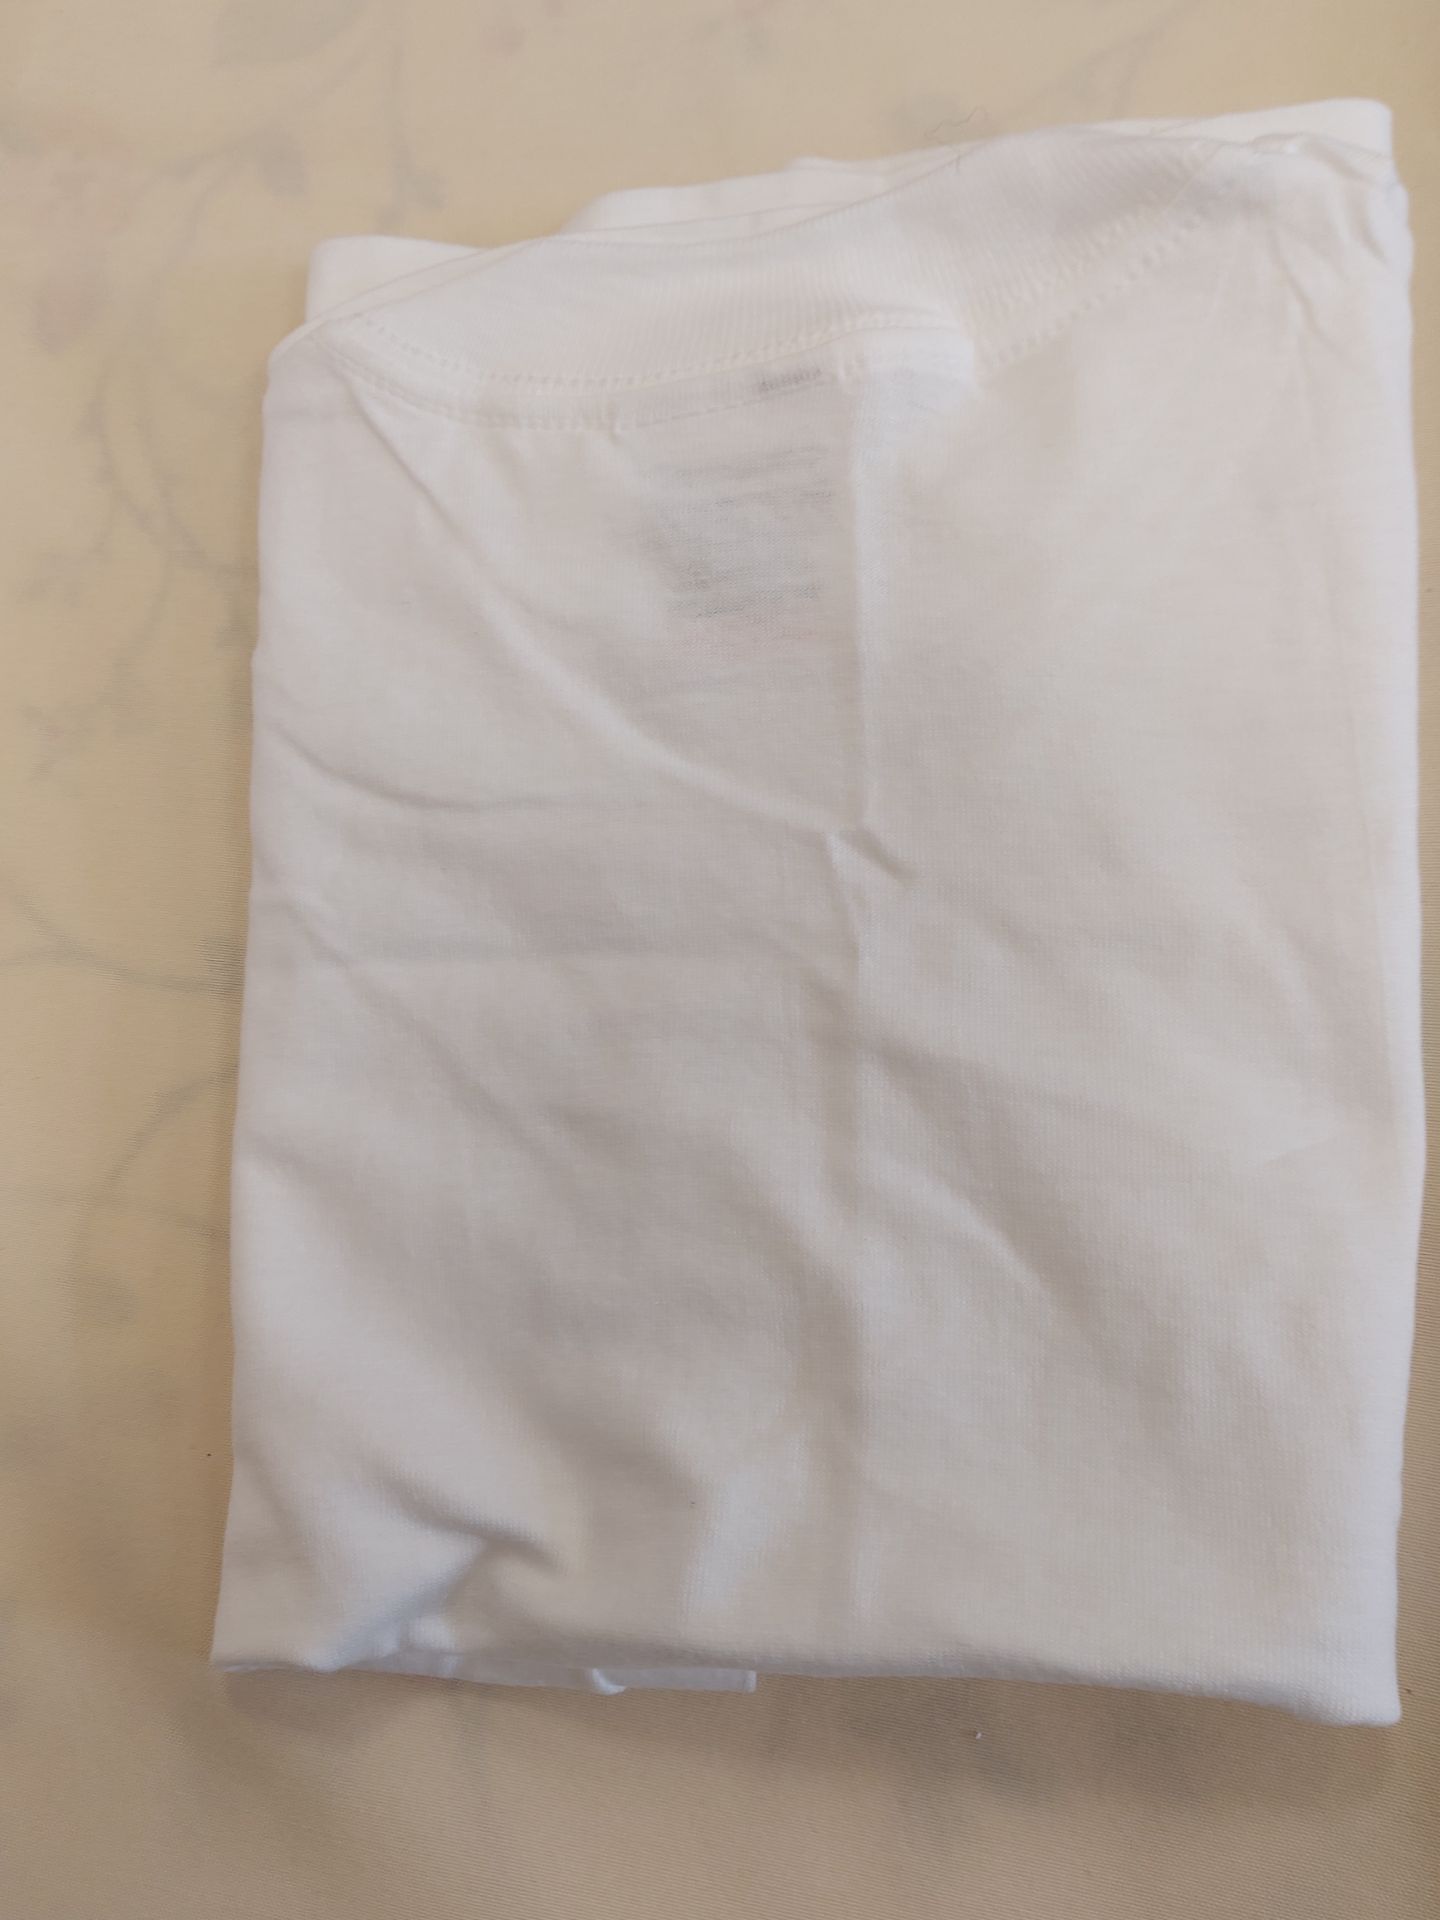 Pack of 6 White Teeshirts - Image 4 of 6